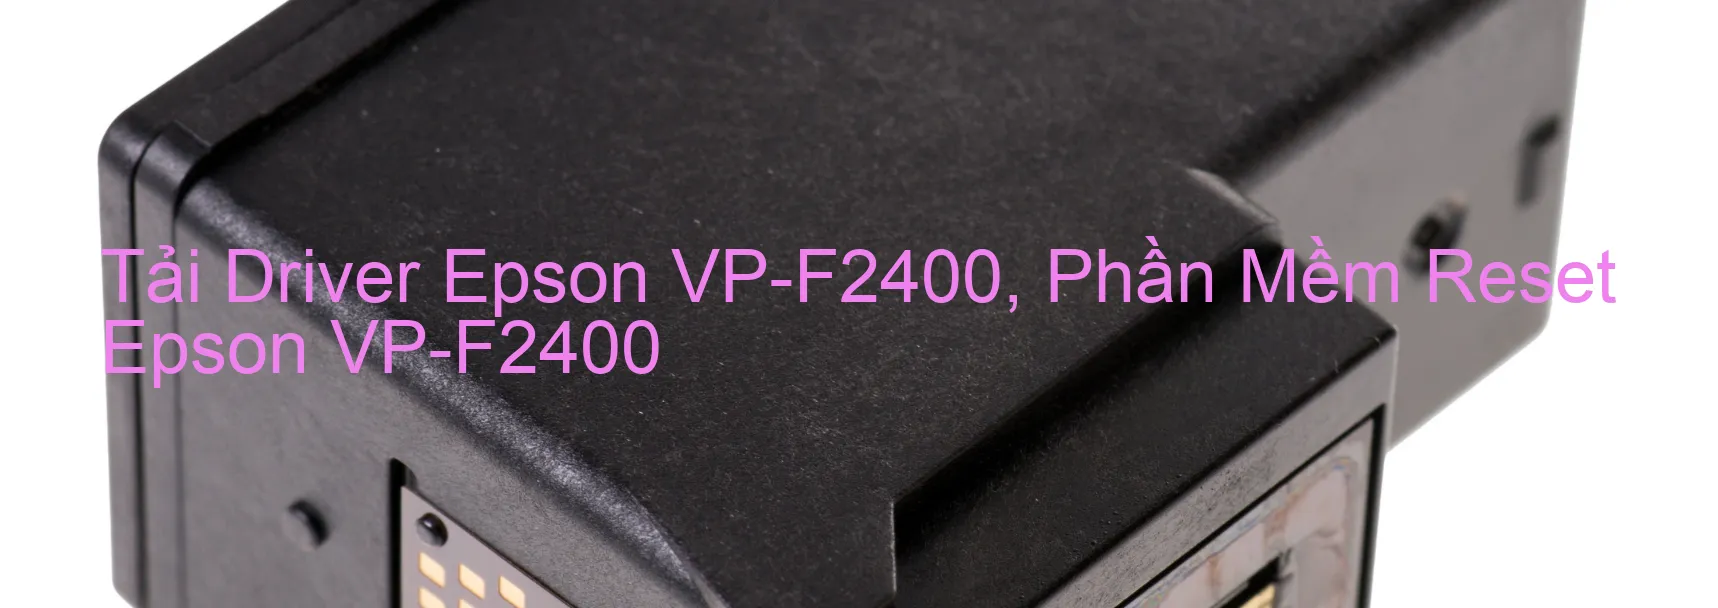 Driver Epson VP-F2400, Phần Mềm Reset Epson VP-F2400